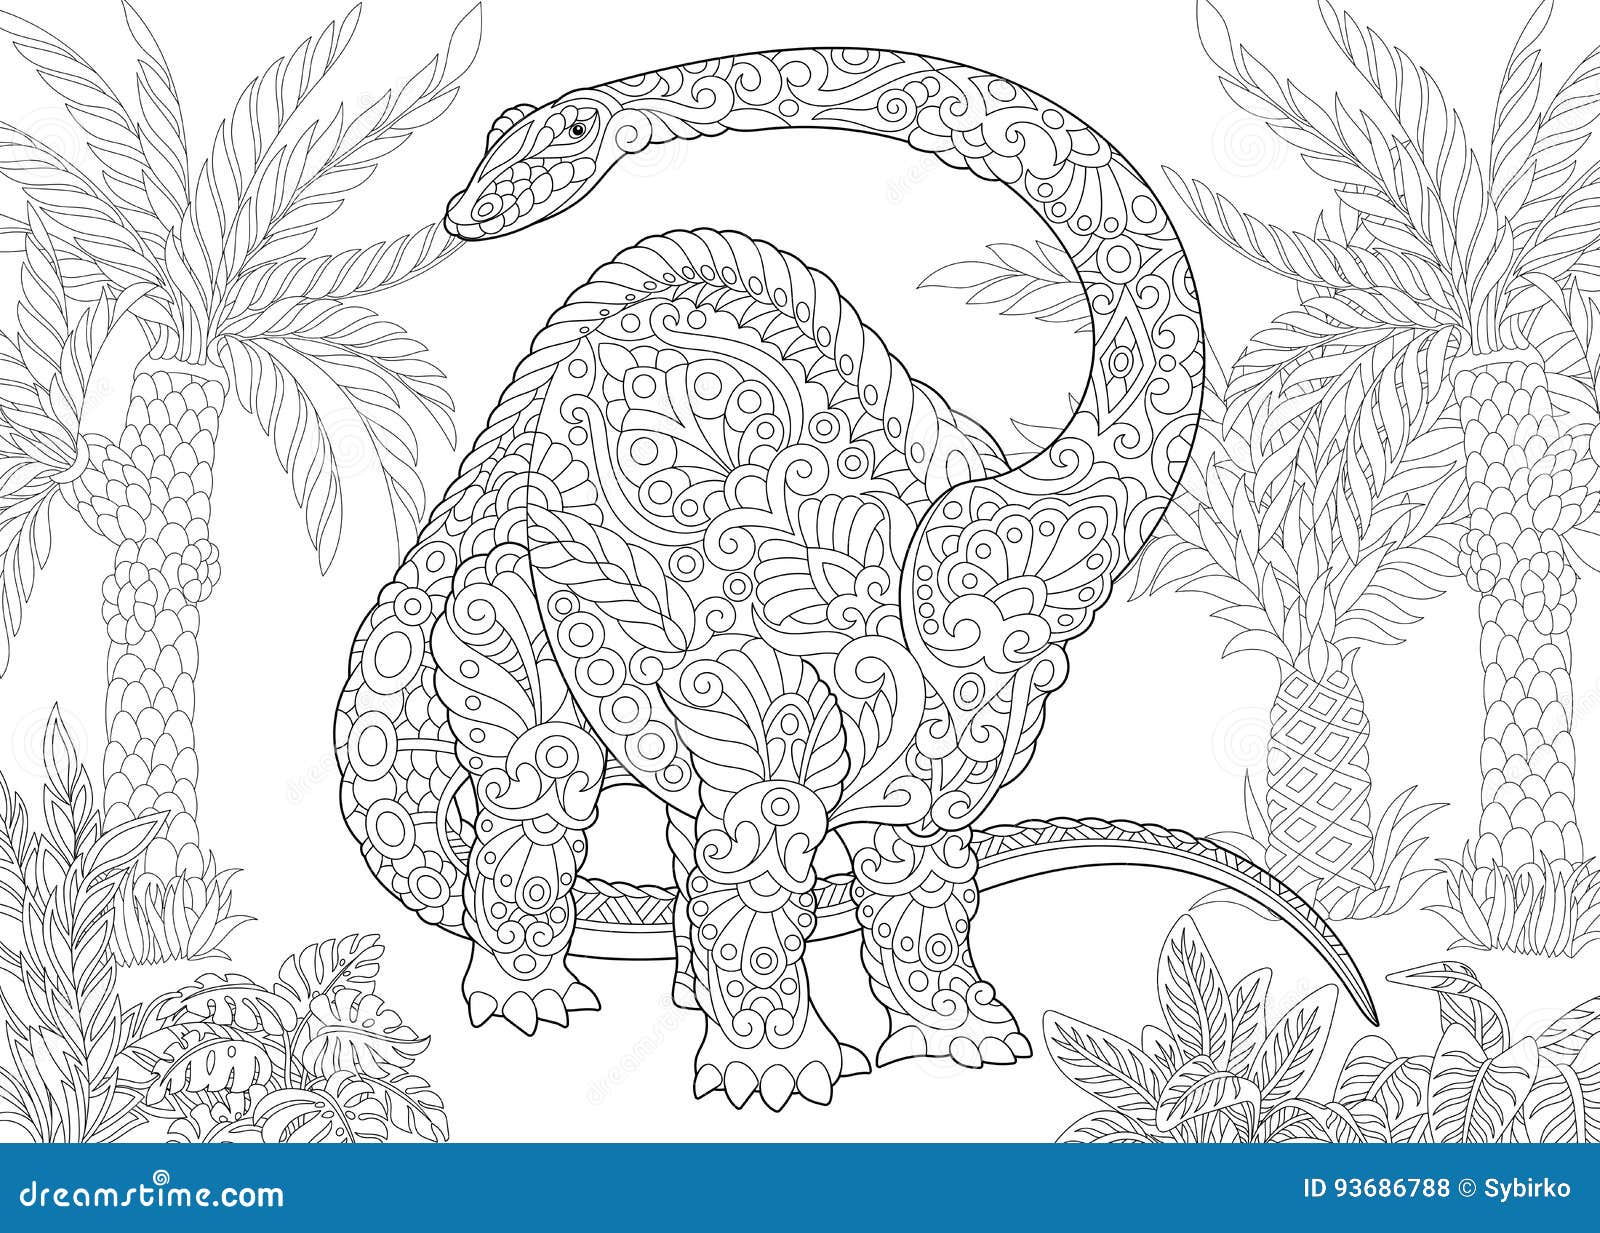 Download Cartoon Diplodocus Dinosaur Coloring Page Vector Illustration | CartoonDealer.com #28884110